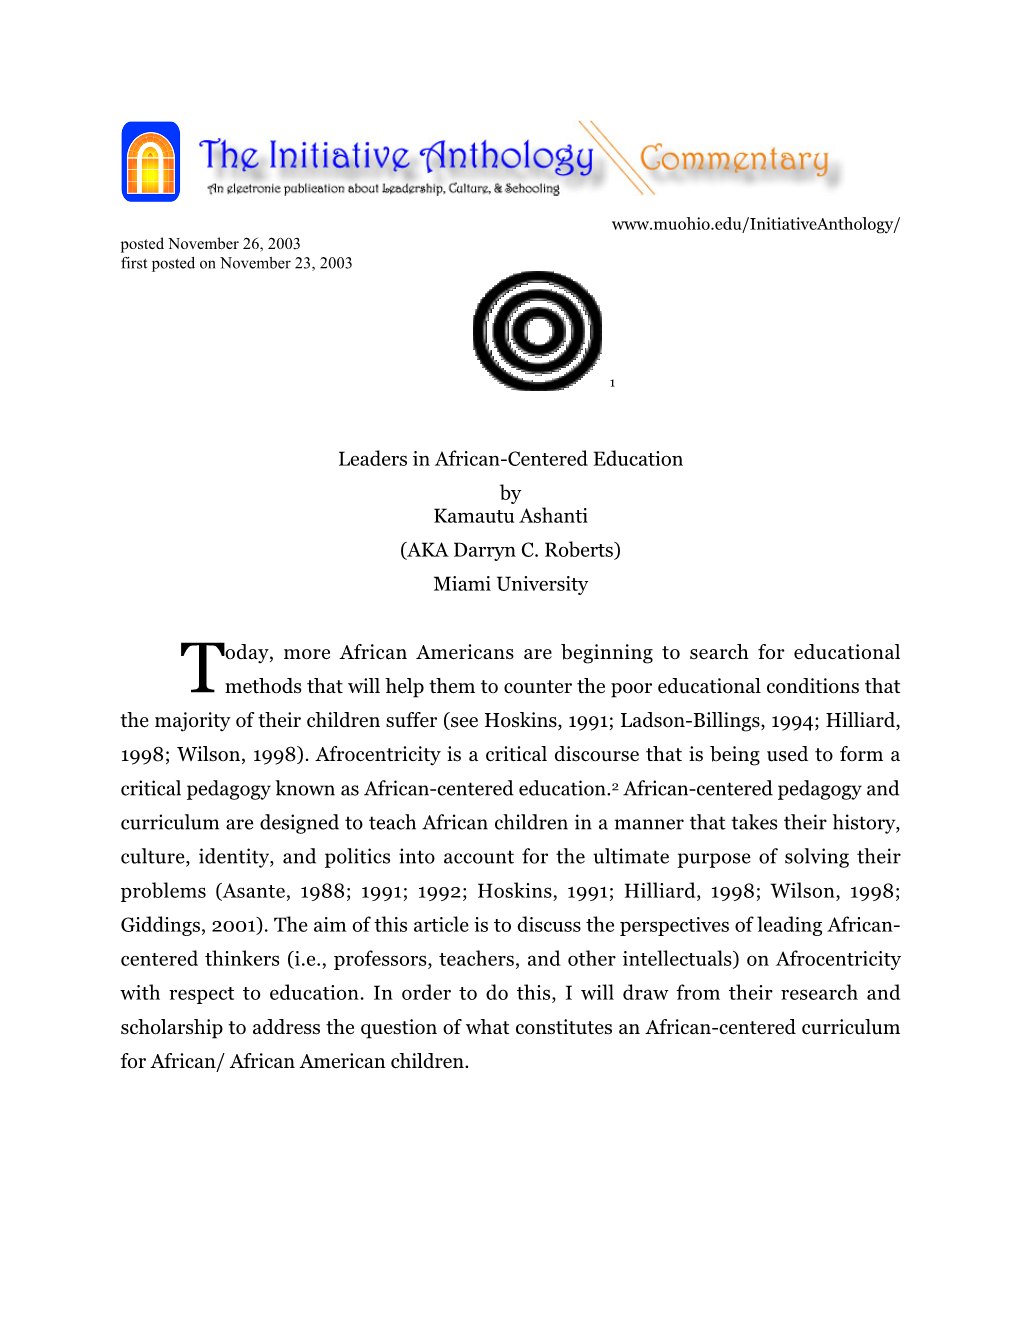 Leaders in African-Centered Education by Kamautu Ashanti (AKA Darryn C